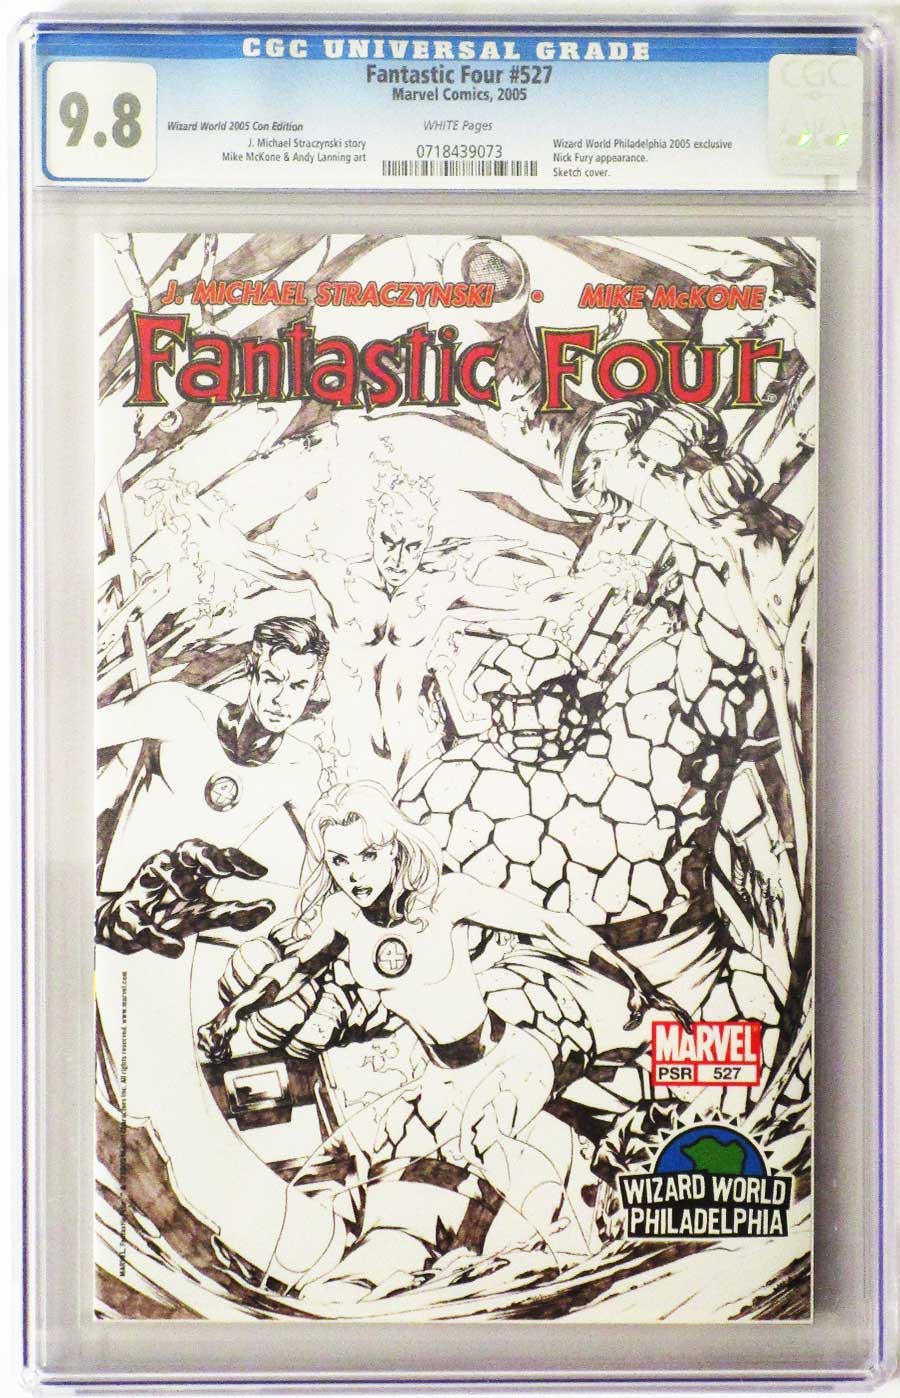 Fantastic Four Vol 3 #527 Cover E WWPA Mike McKone Sketch Variant Cover CGC 9.8